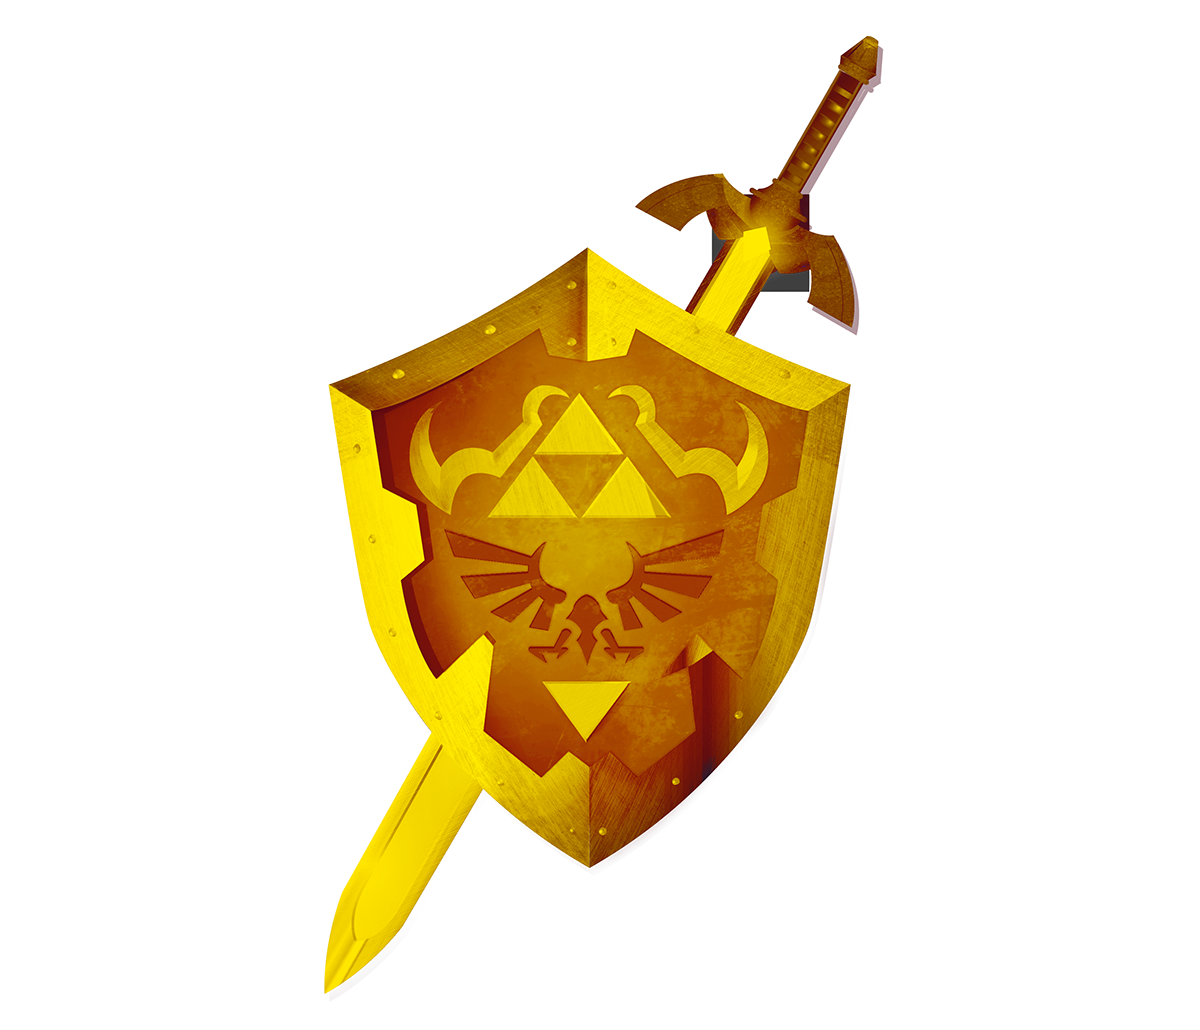 zelda Legend of Zelda WIND WAKER hyrule warriors Video Games youtube youtube branding Ocarina Of Time Breath of the wild